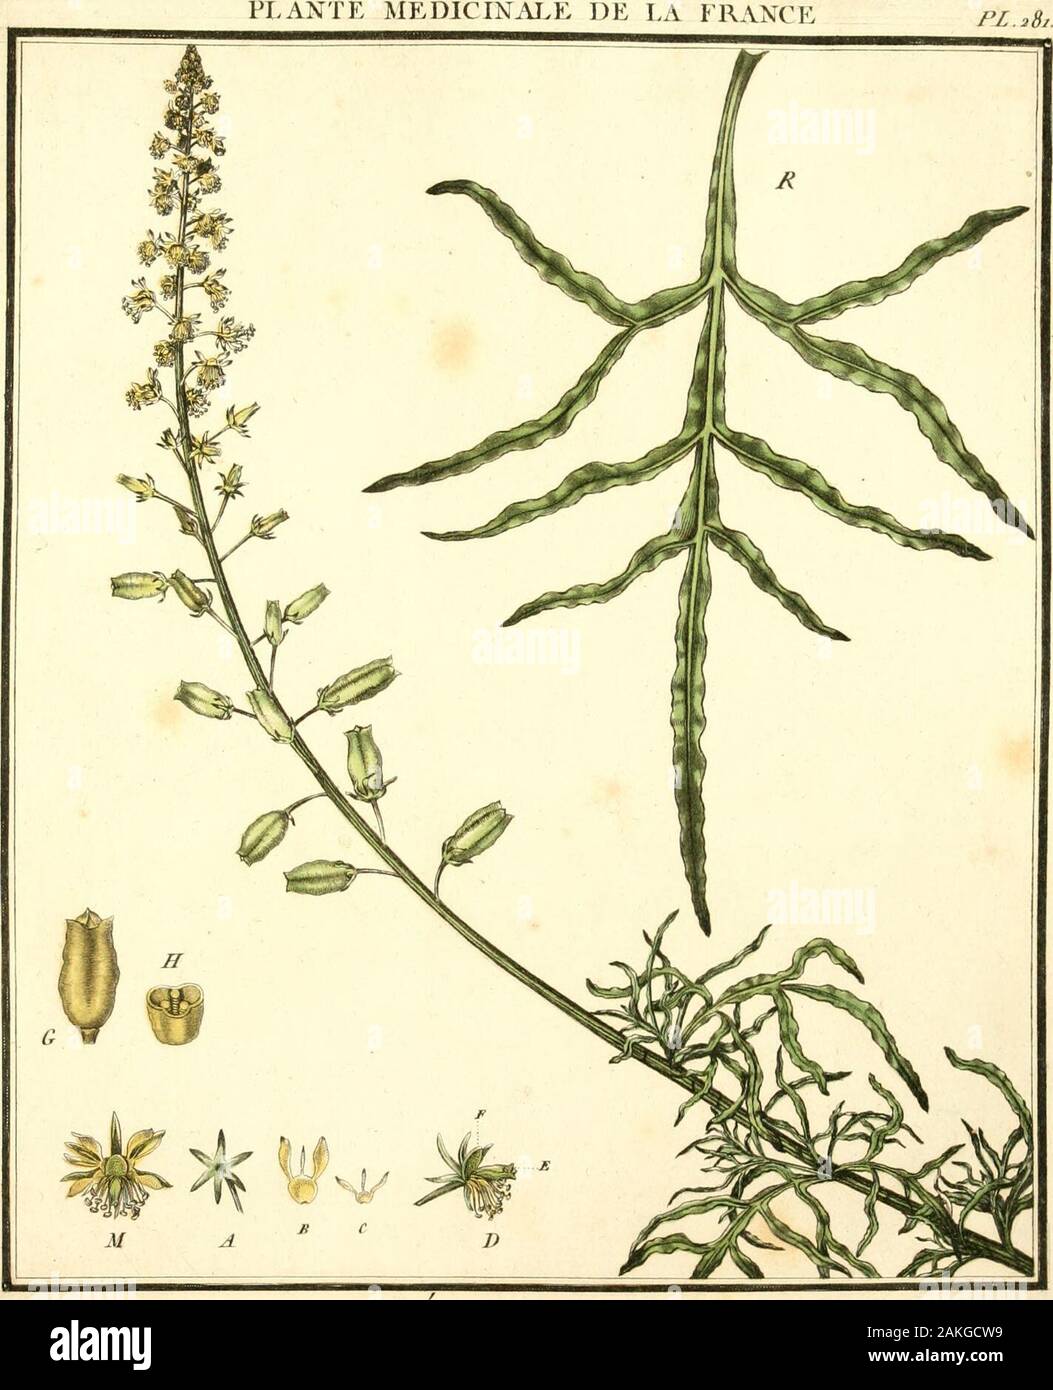 Herbier de la Francia; ou, Colección complette des plantes indigènes de ce royaume; avec leurs proprits, et leurs usos en medicina . LA ARANKETTSK PKZI/K . X Ç Zi/j ( AirlllCOSti . . En irputc celfe i^wevc i/^ oft^x^c m &gt;fep^em6re^re tù ef ocio/ip /tir ///vu- Pinnuii.p r/ mMtt/&GT;I&GT;, ,m/- /e /&GT;fn/ /wfijiîûp, q/ûu^uir en /a rmeonire afir-n .rtir /ar oe/f/ûiues û/i? //Tv ferrauLf jear el a/orj effe e^^Jort pe/u^... eéte s^ ^tlr^^^^nc ^e,r mi/rtM e/ptvni- i/CCE qmre avec /krûue//âP sobre povrroù /un ean/ani/re, au pfe/instituto nacional de investigación educativa eoi(f (/en/,par .Señor Sordf crent/â ef par ,m ,riir^u-f cv/RR/r Foto de stock